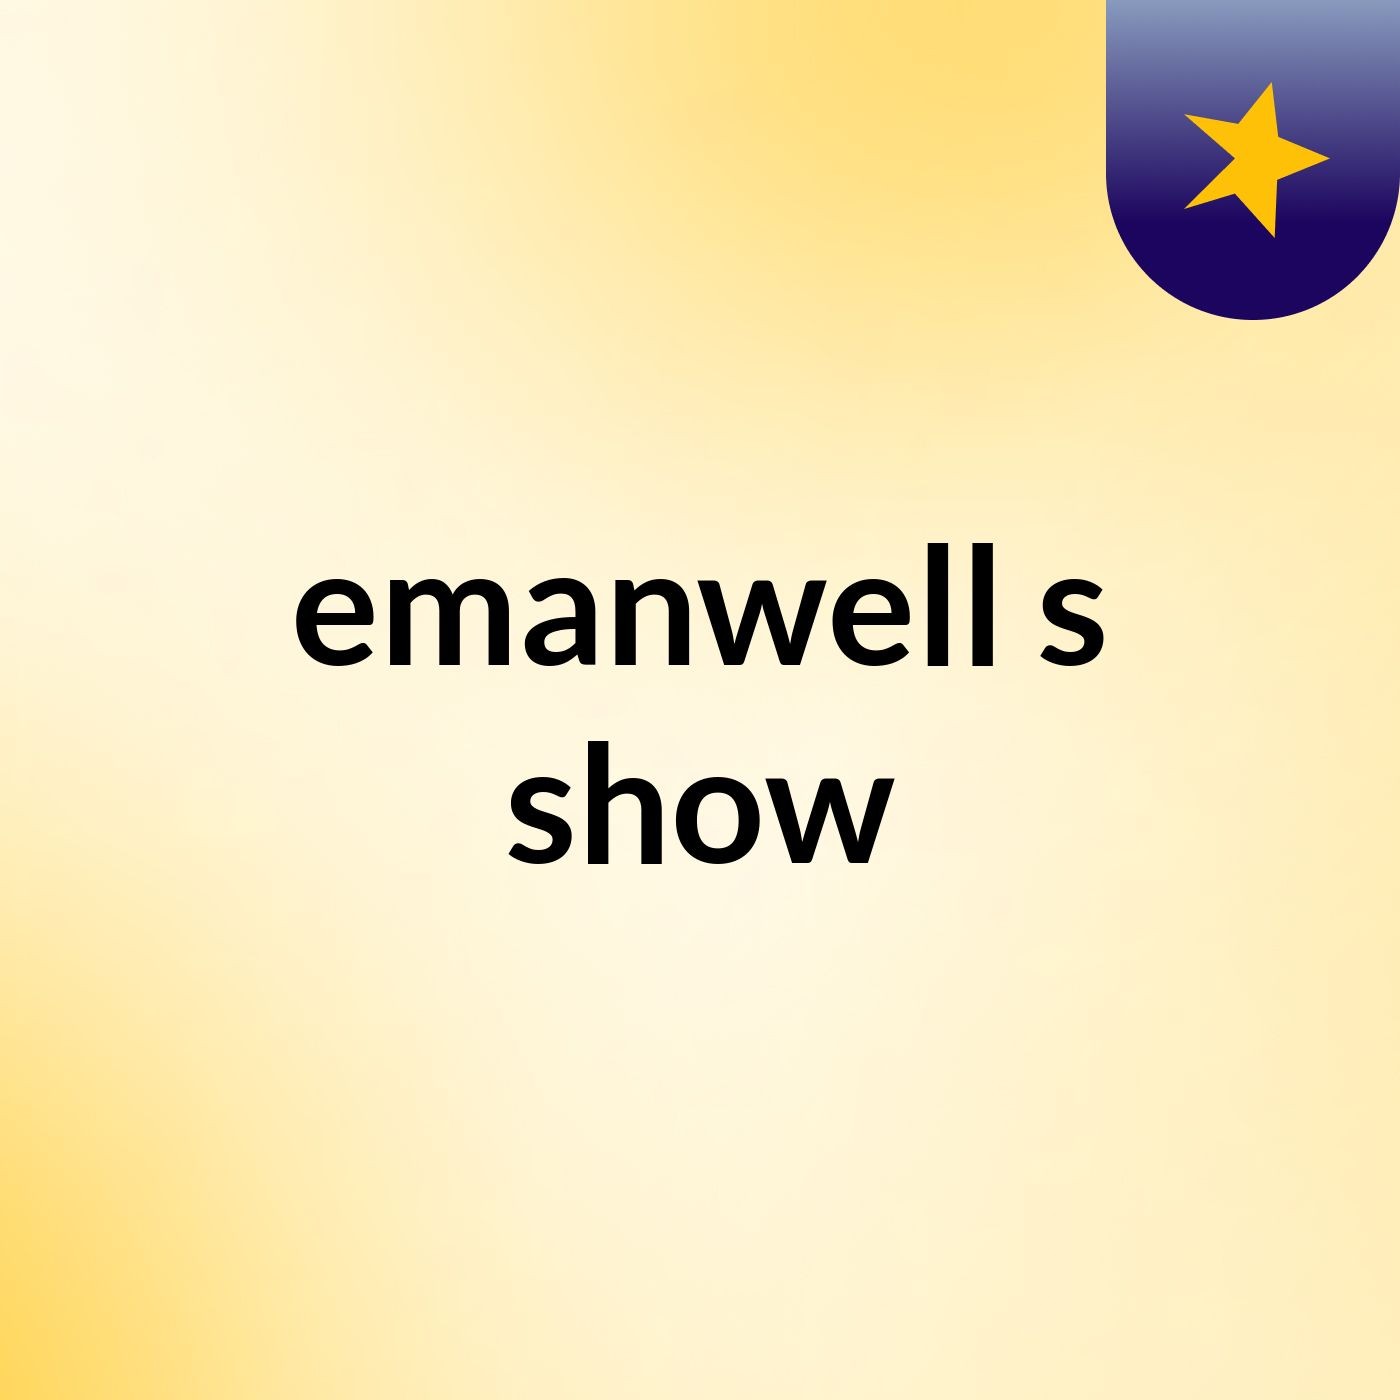 emanwell's show